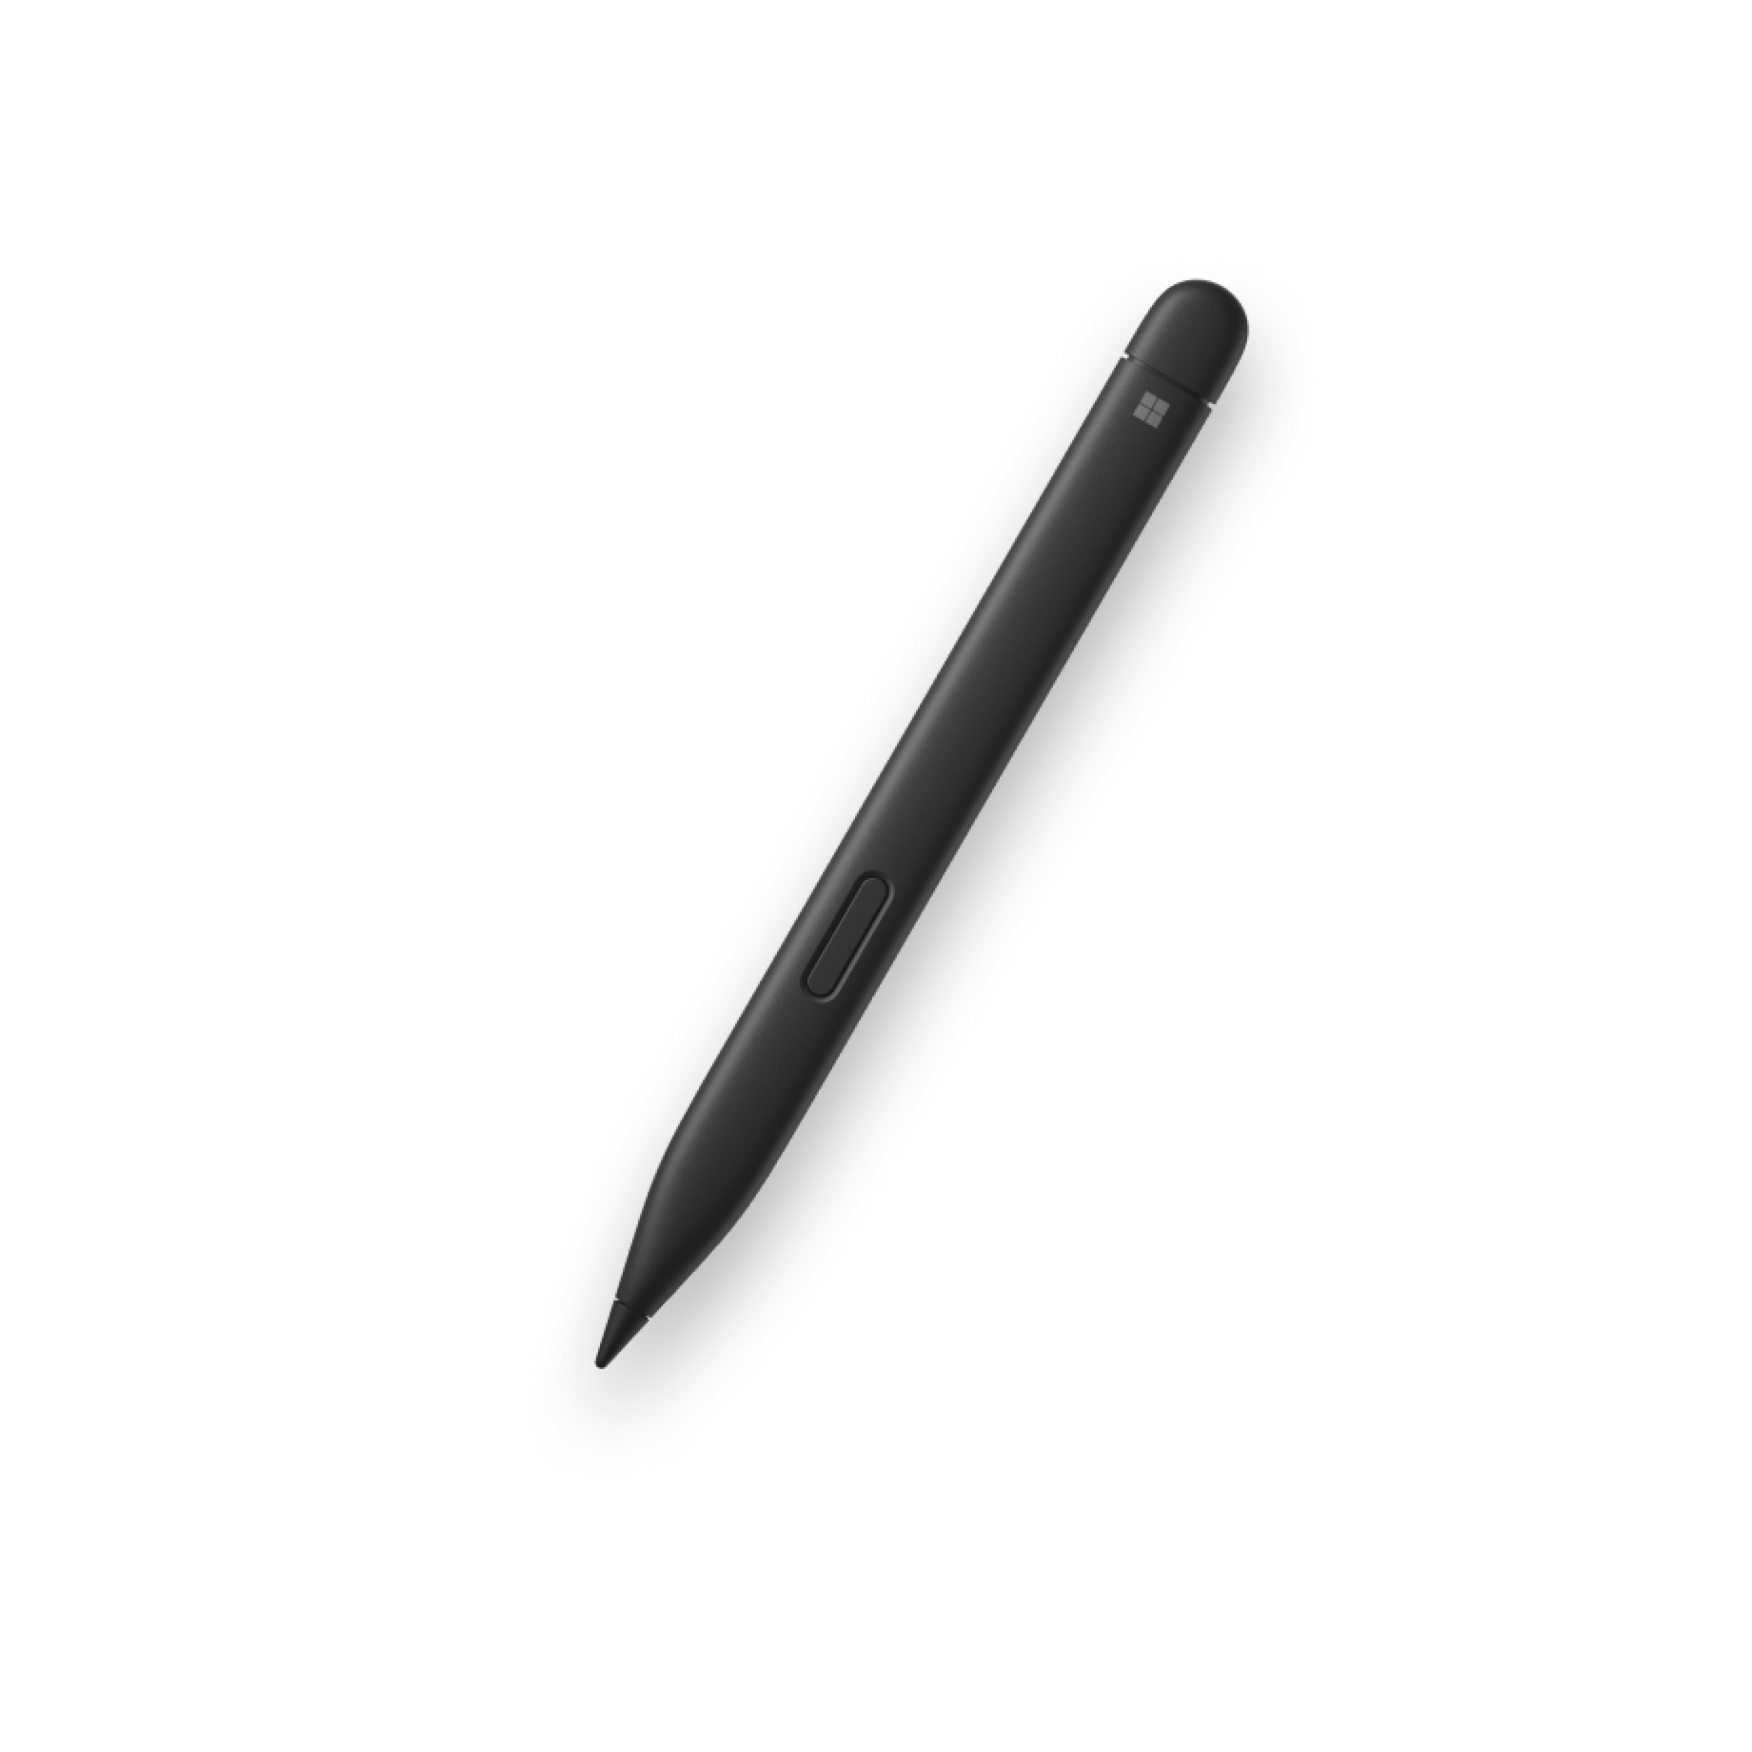 Surface 超薄触控笔 2